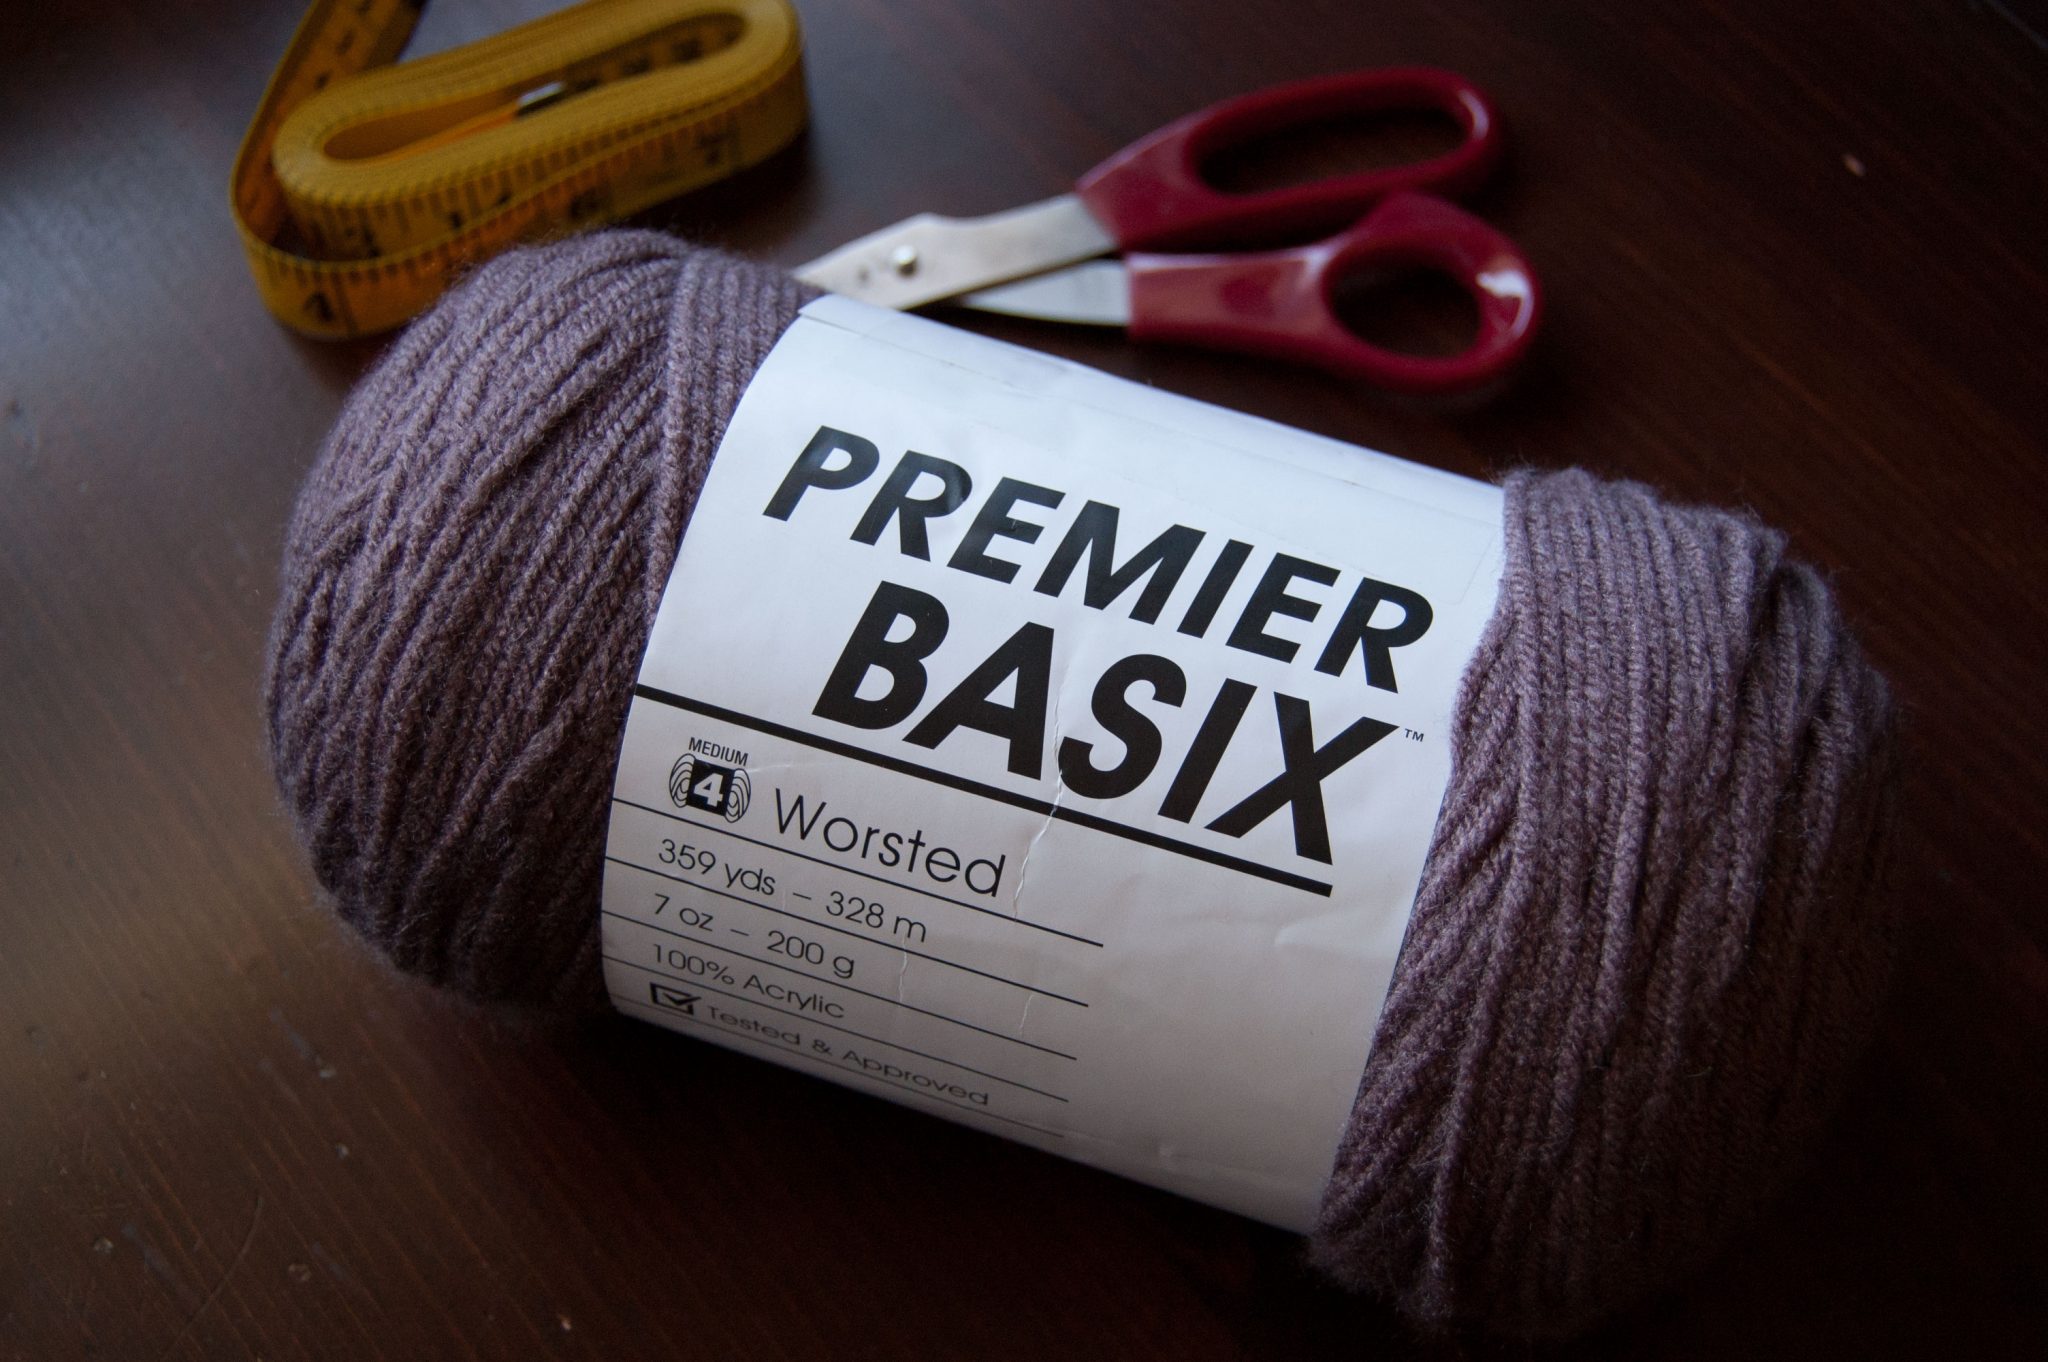 Premier Basix® Super Bulky – Premier Yarns